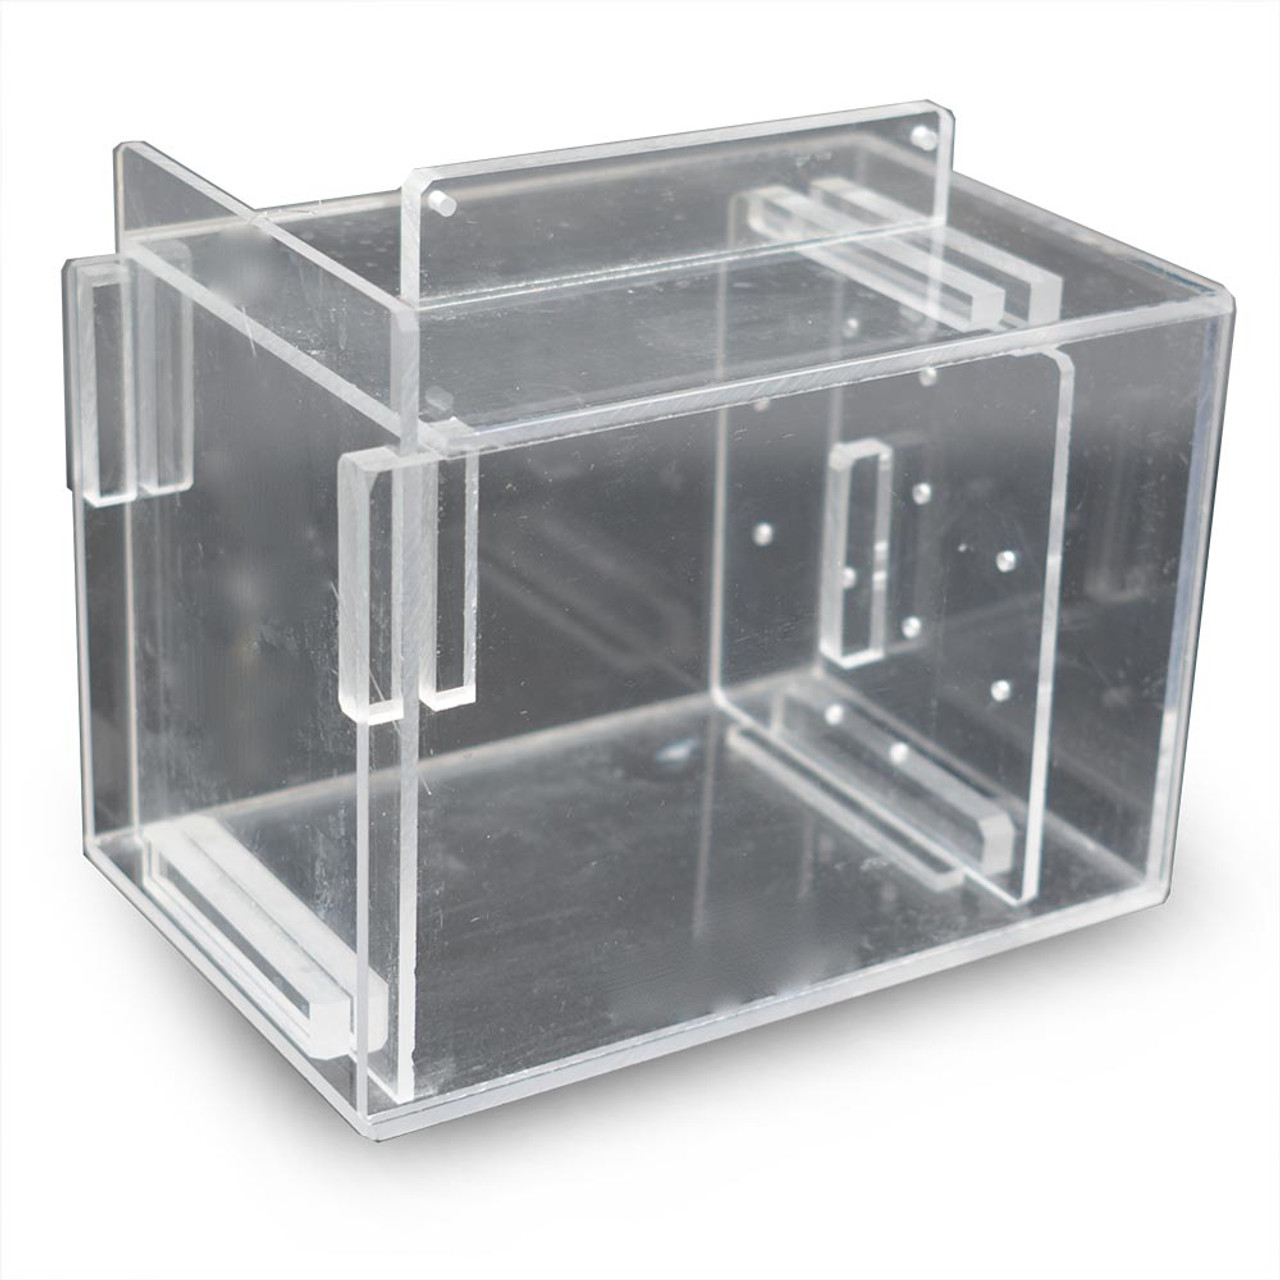 SaltwaterAquarium Small Acrylic Fish & Pest Trap 6 x 4 x 4 for Aquarium  | Acclimation Isolation Box Fish Tank Breeding Box